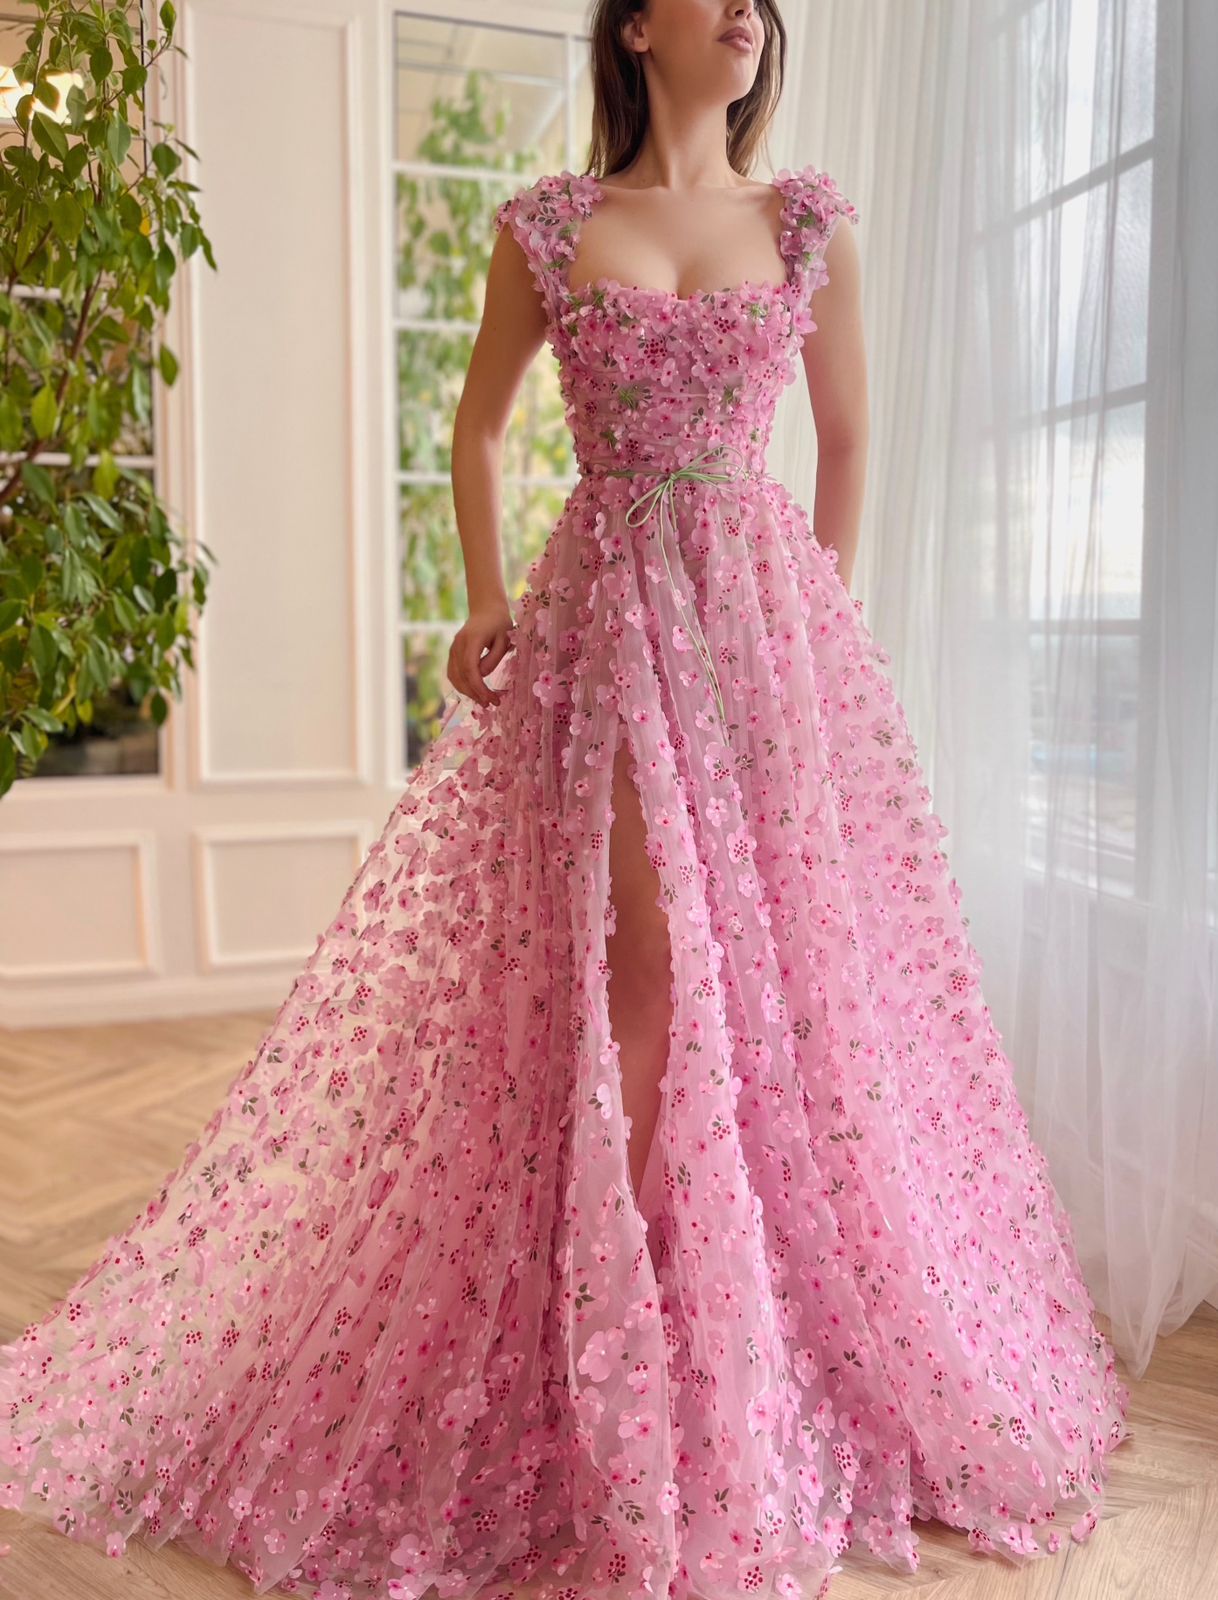 Miranda Kerr wedding dress pictures | Miranda Kerr got married wearing Dior  Couture